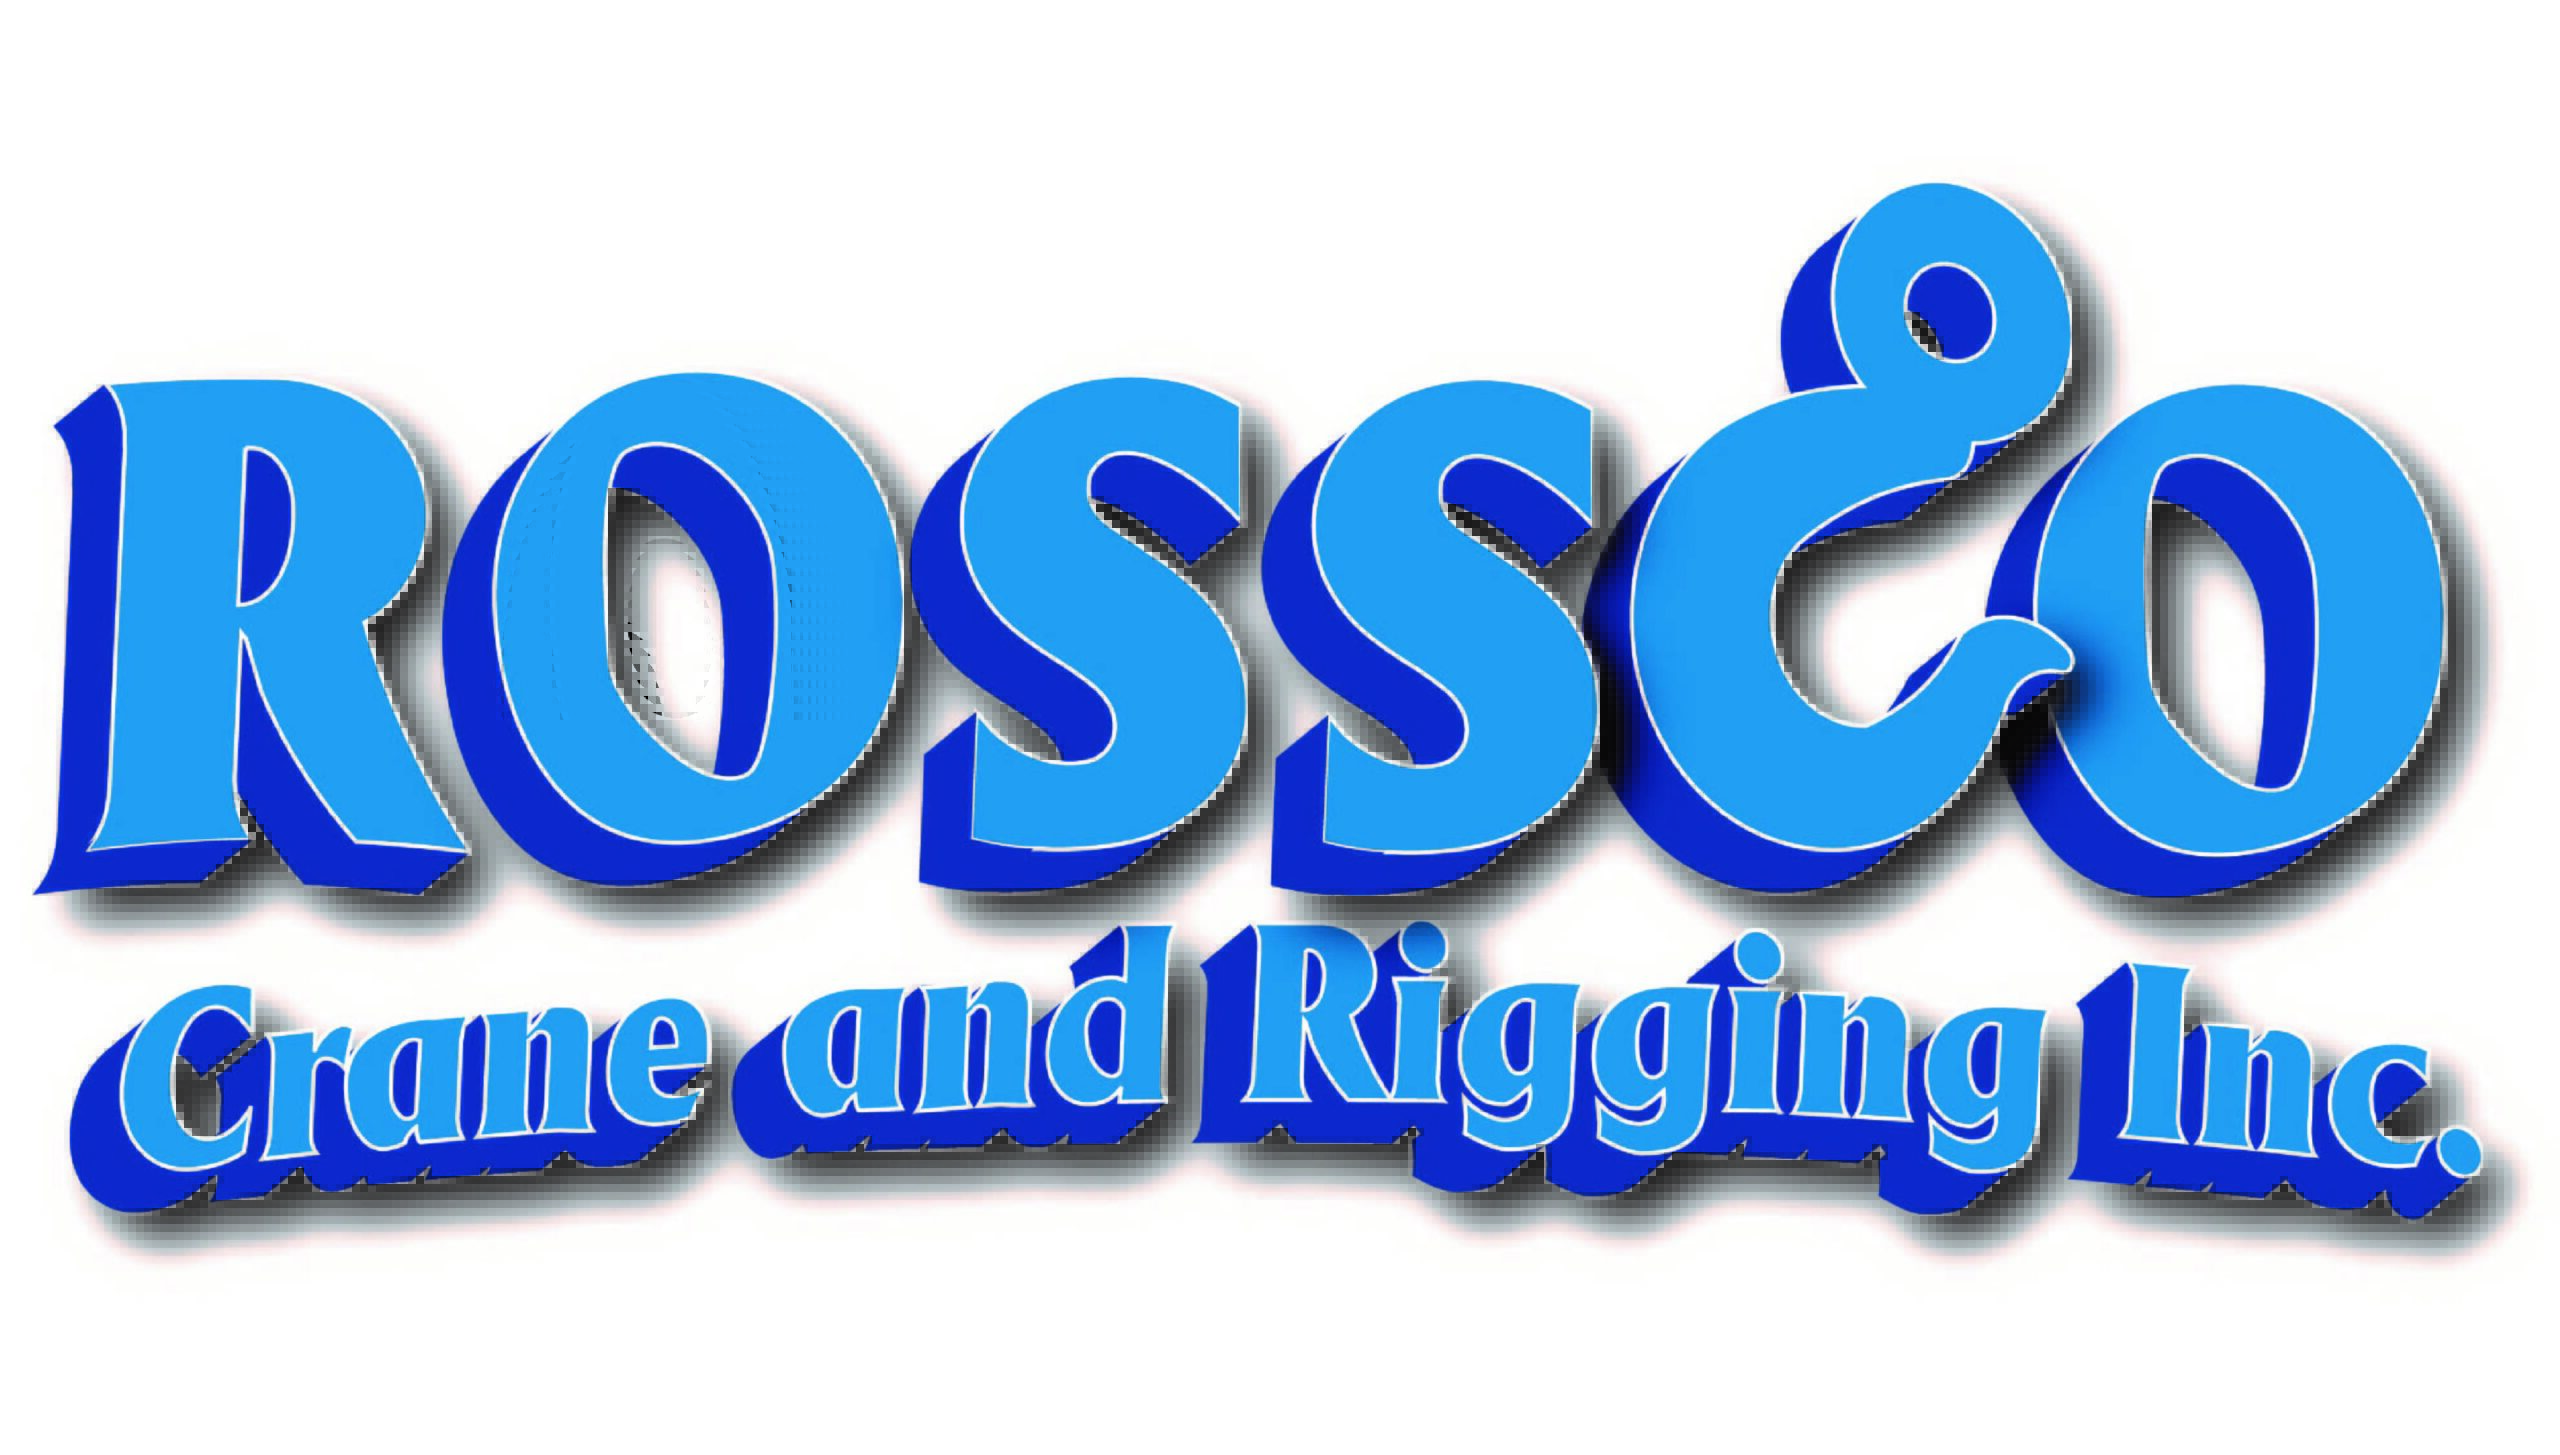 Rossco Crane and Rigging Inc.